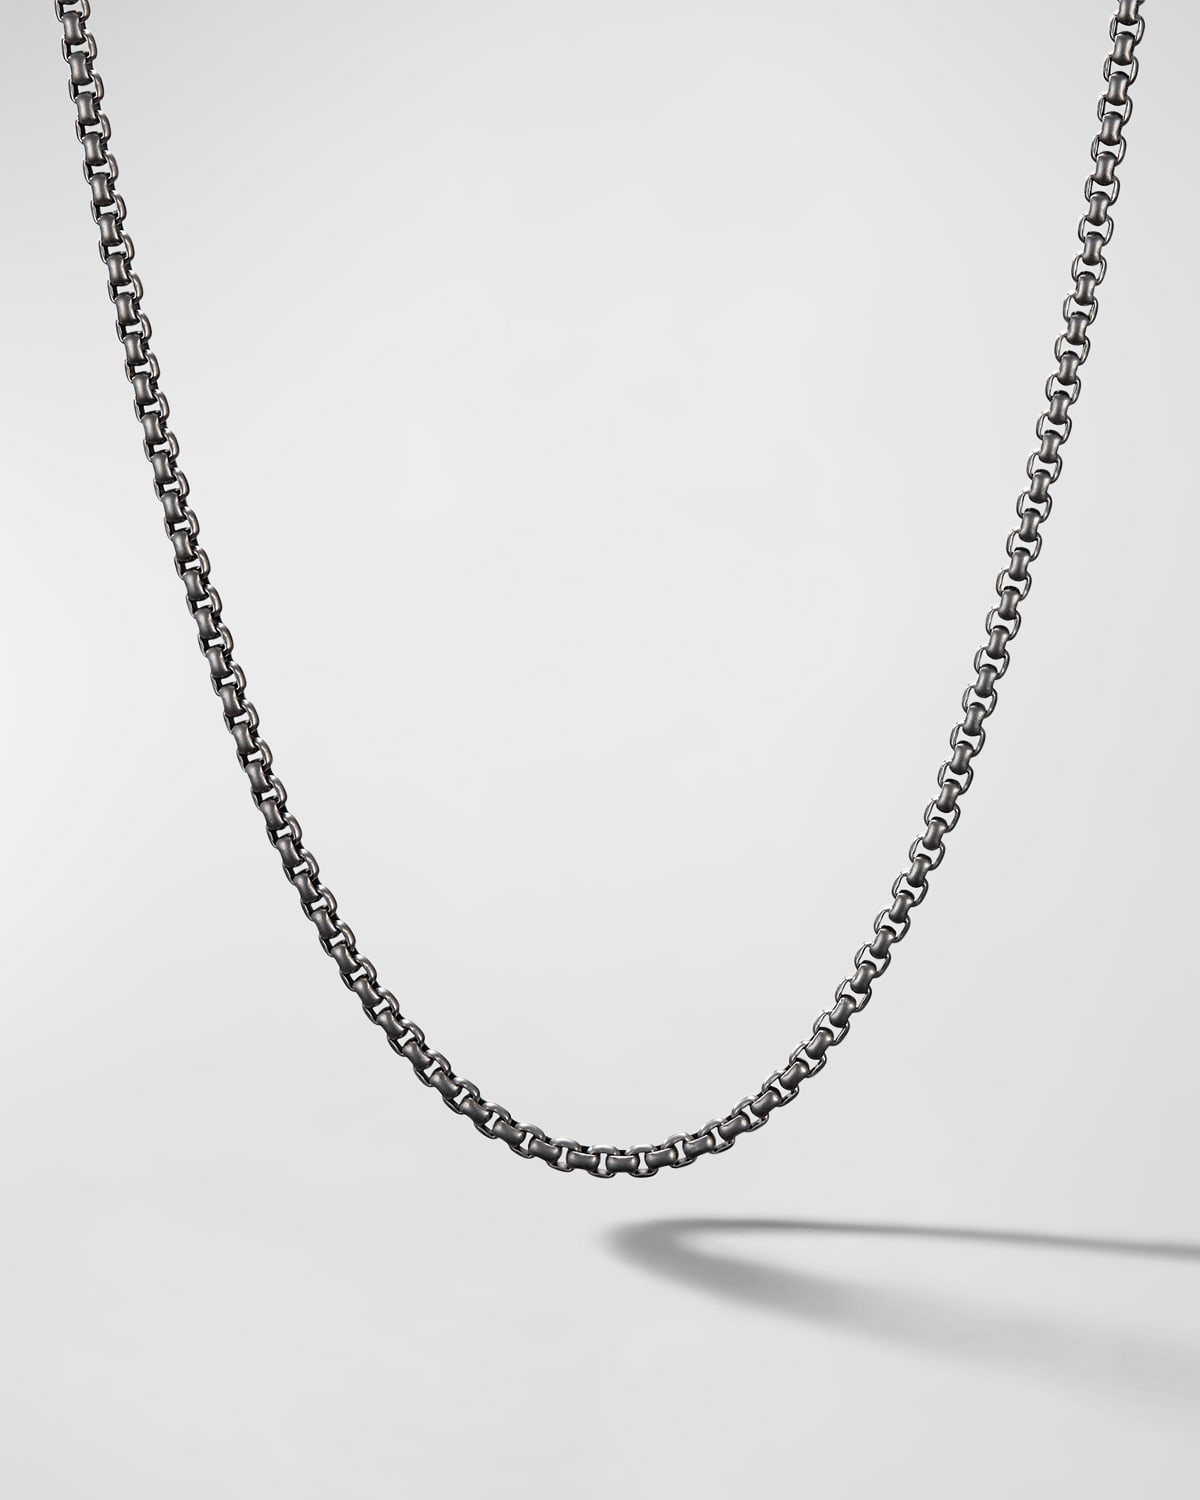 David Yurman Men's Box Chain Necklace in Darkened Stainless Steel, 4mm ...